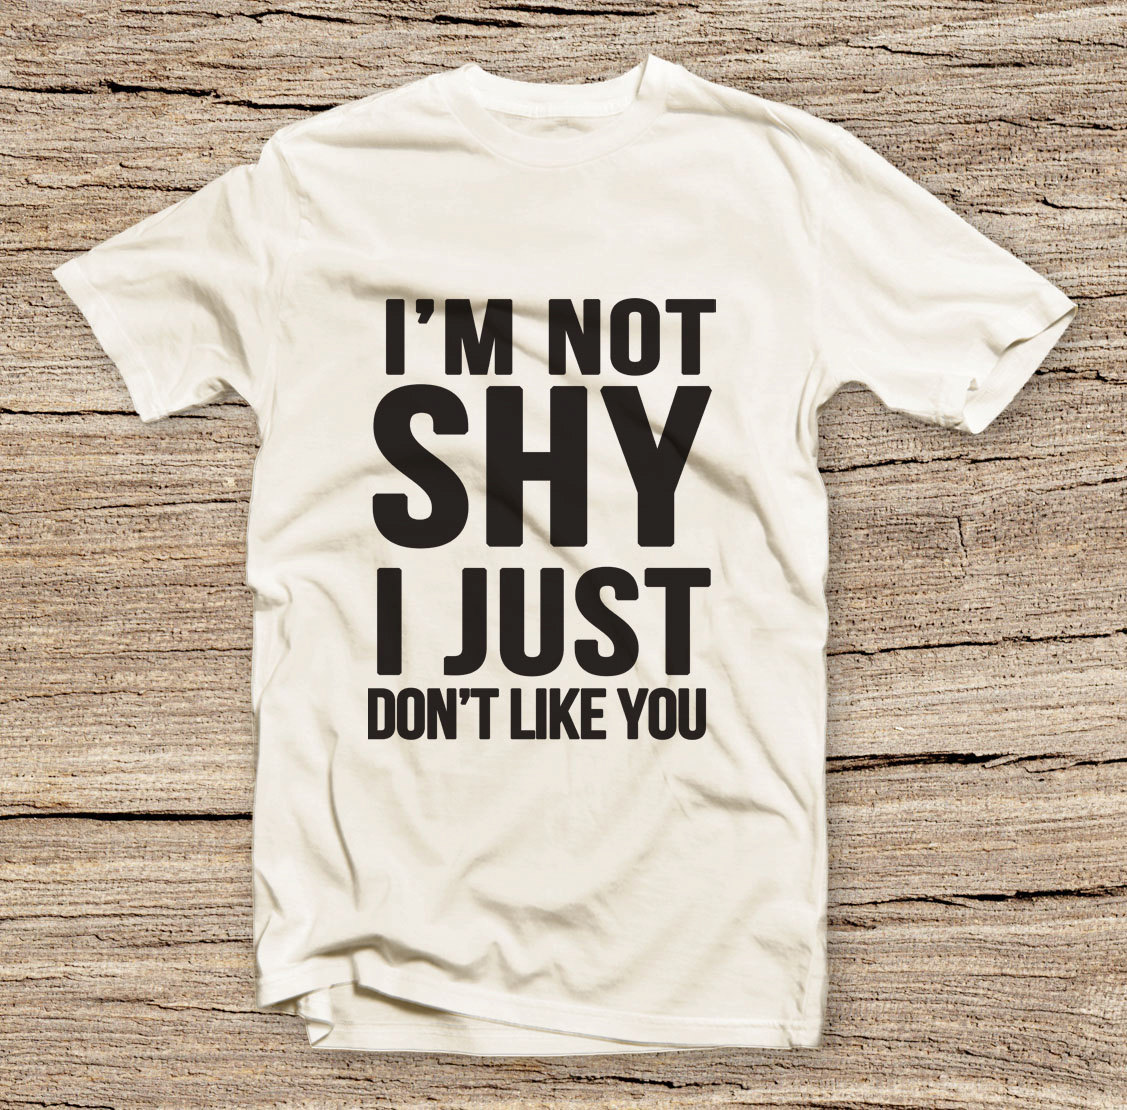 Pts-192 I'm Not Shy T-shirt, Fashion Shirts, Funny T-shirt, Cute T-shirts, Cool T-shirts